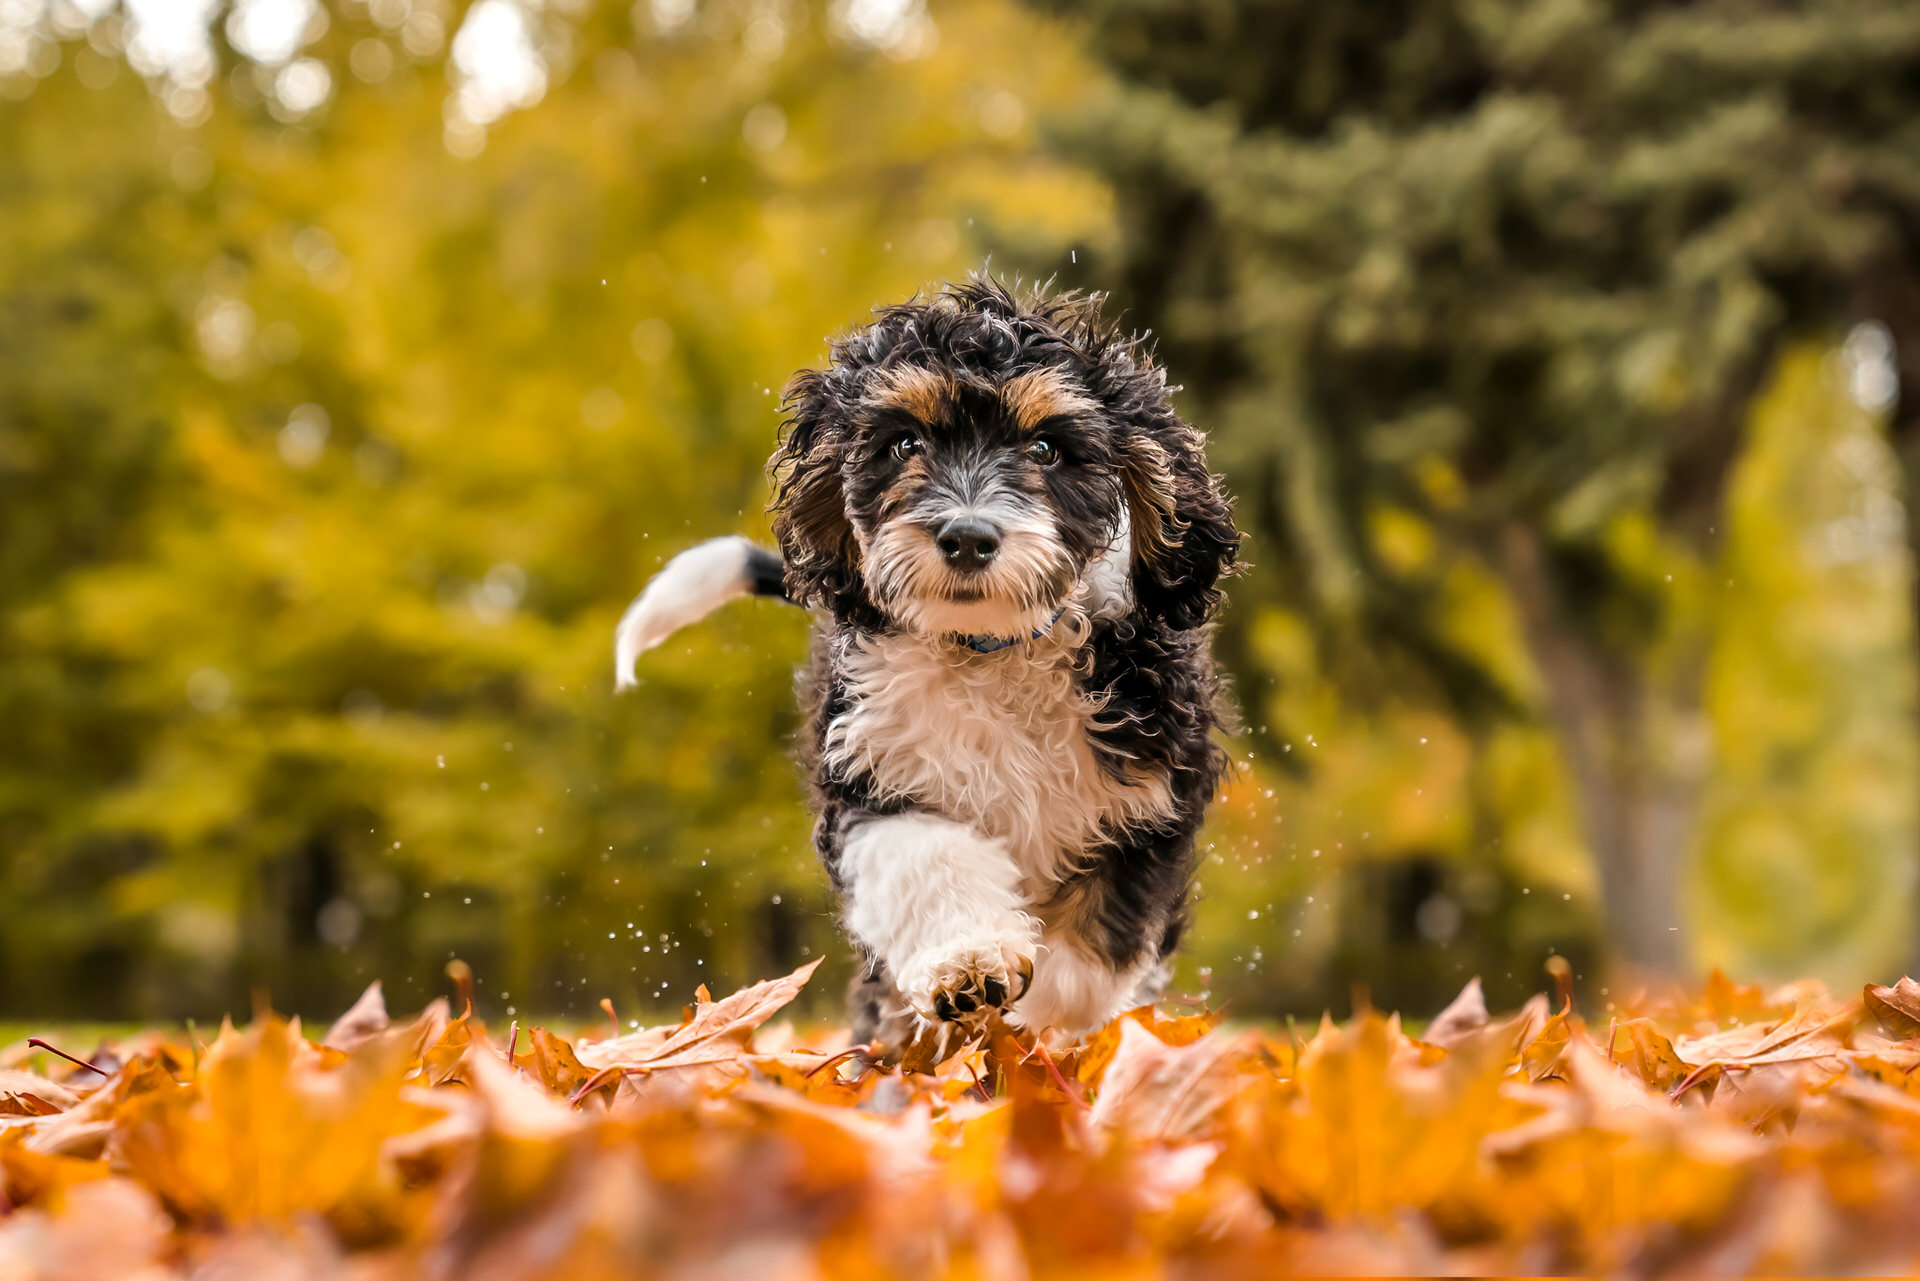 Mini bernedoodle puppy runs through autumn leaves